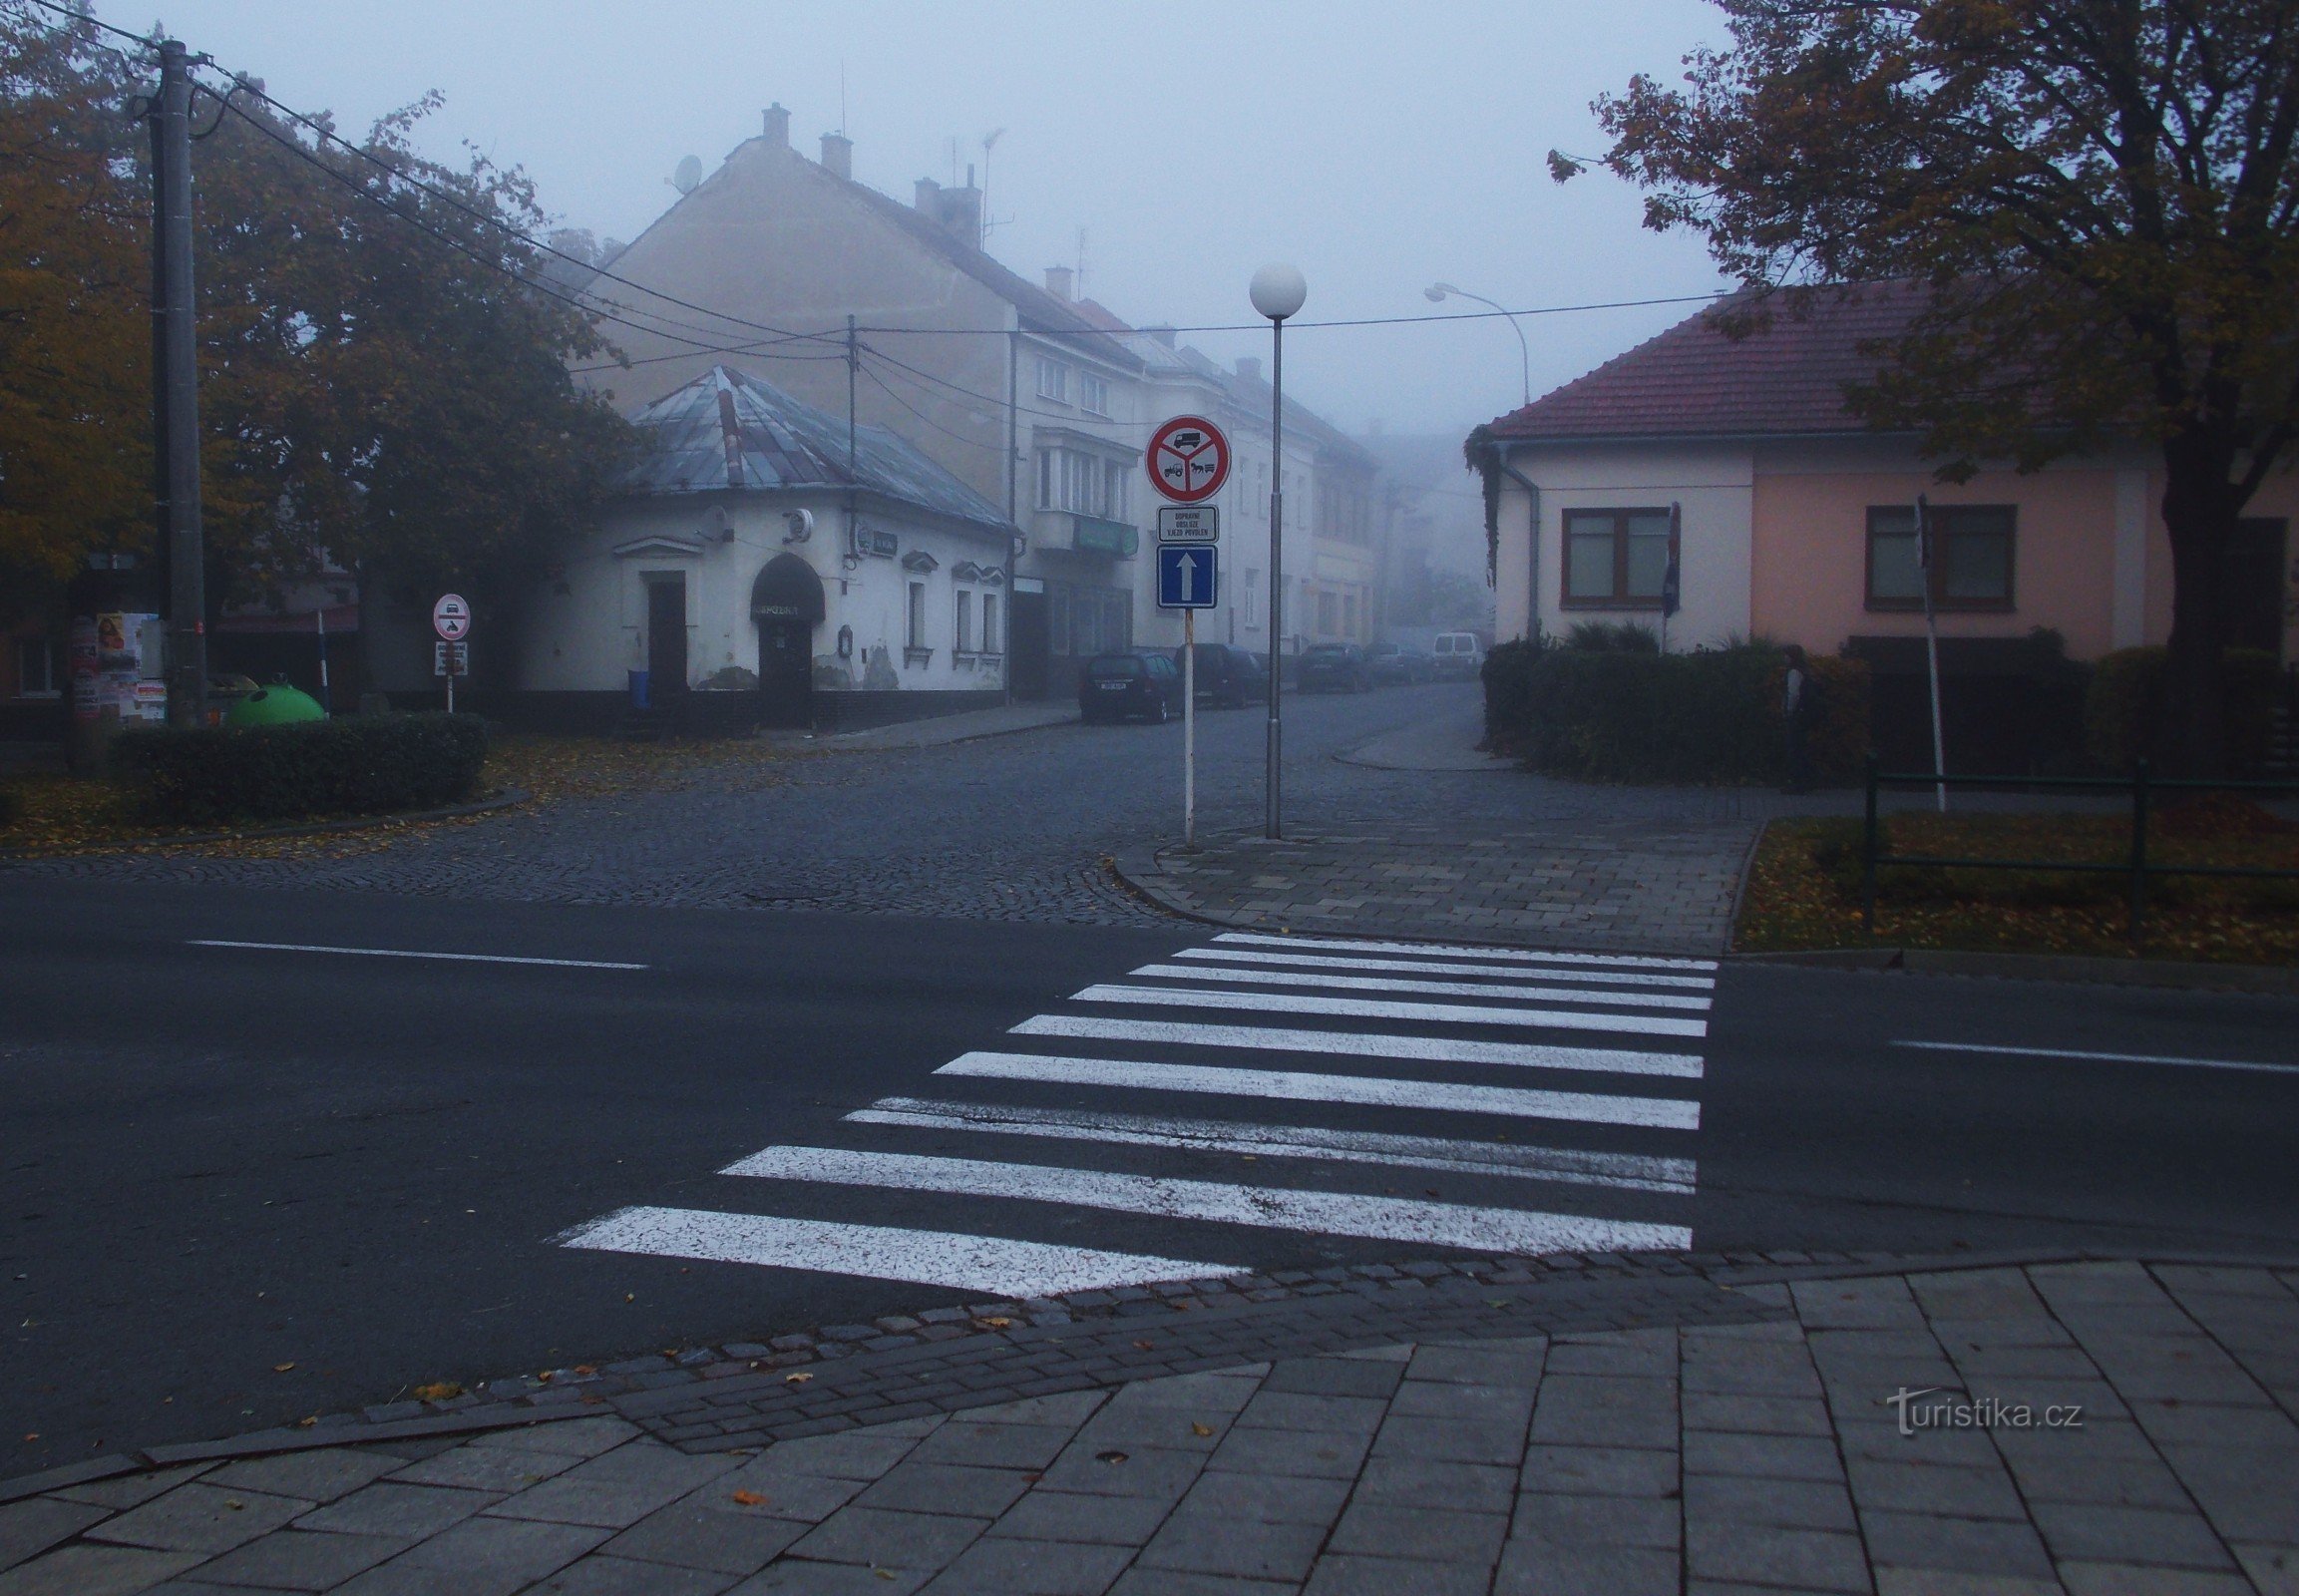 A walk through the center of Kojetín